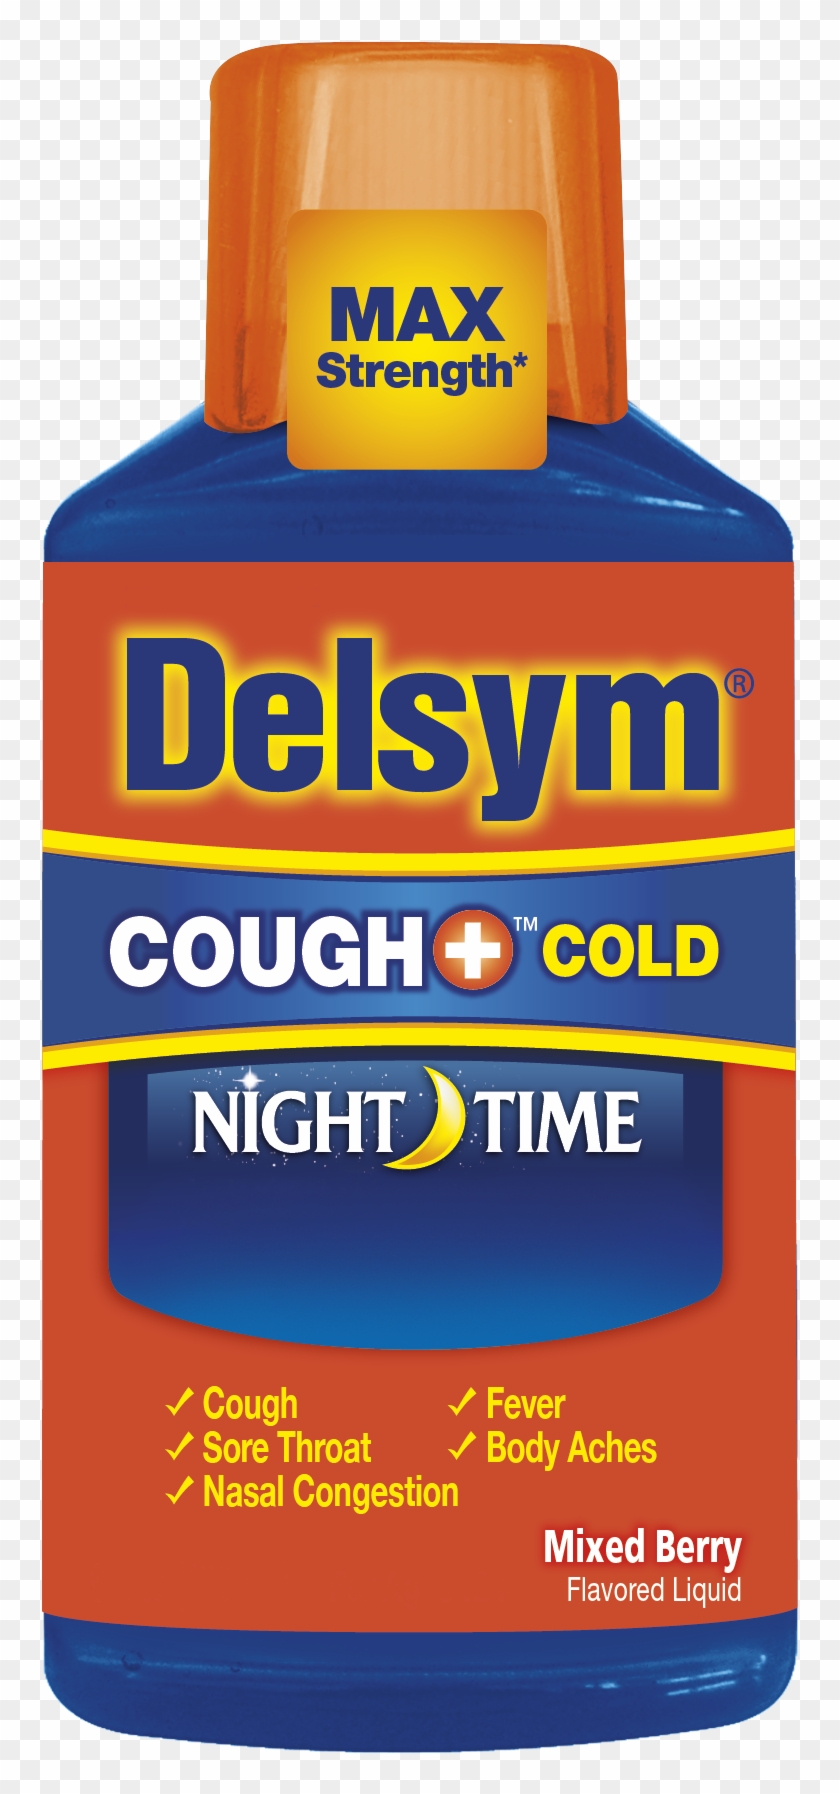 Delsym® Nighttime Cough Medicine - Night Time Cough Medicine Clipart #637831